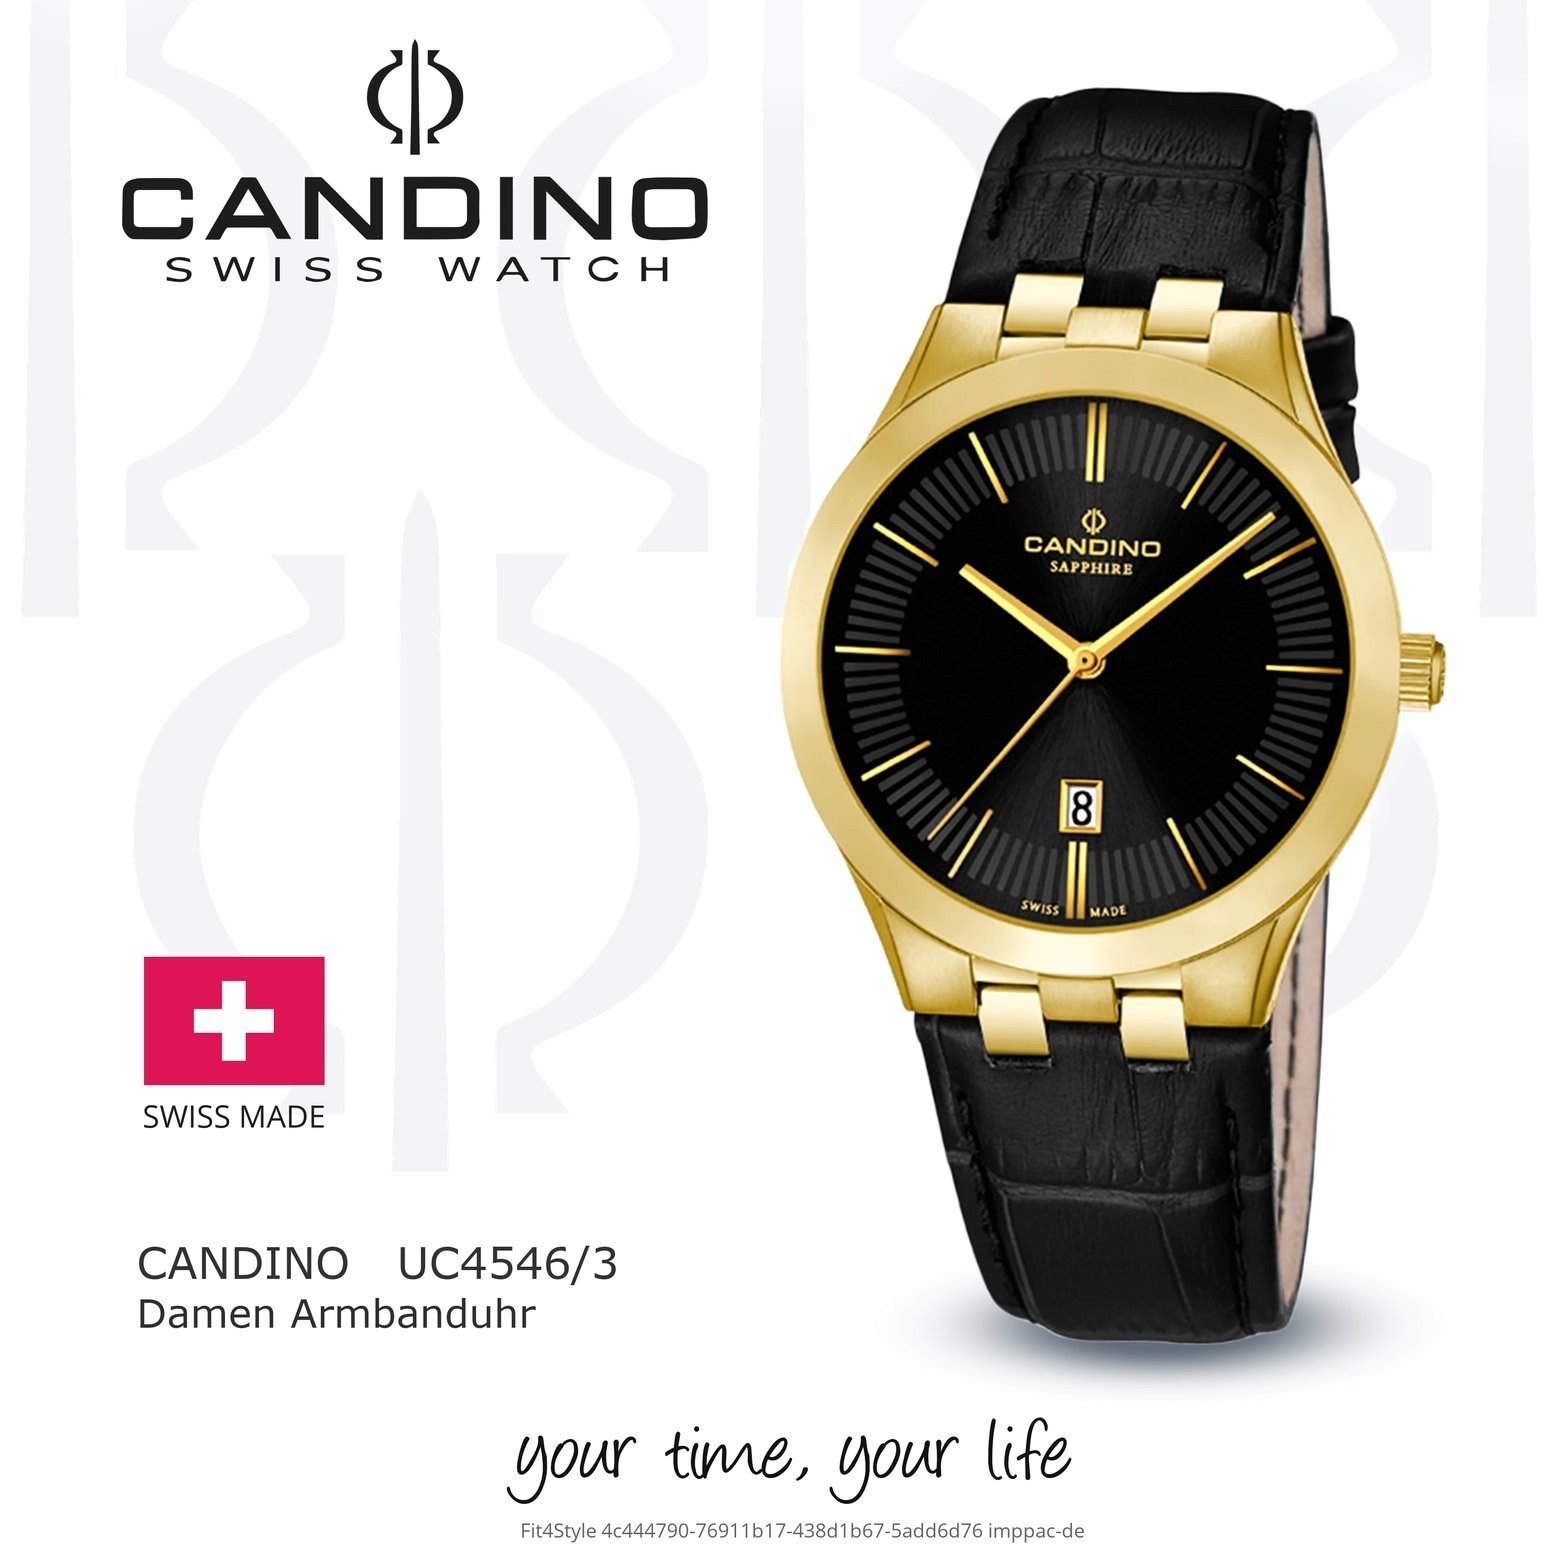 Candino Quarzuhr schwarz, C4546/3, Quarzuhr Armbanduhr Damen Candino Lederarmband rund, Damen Luxus Analog